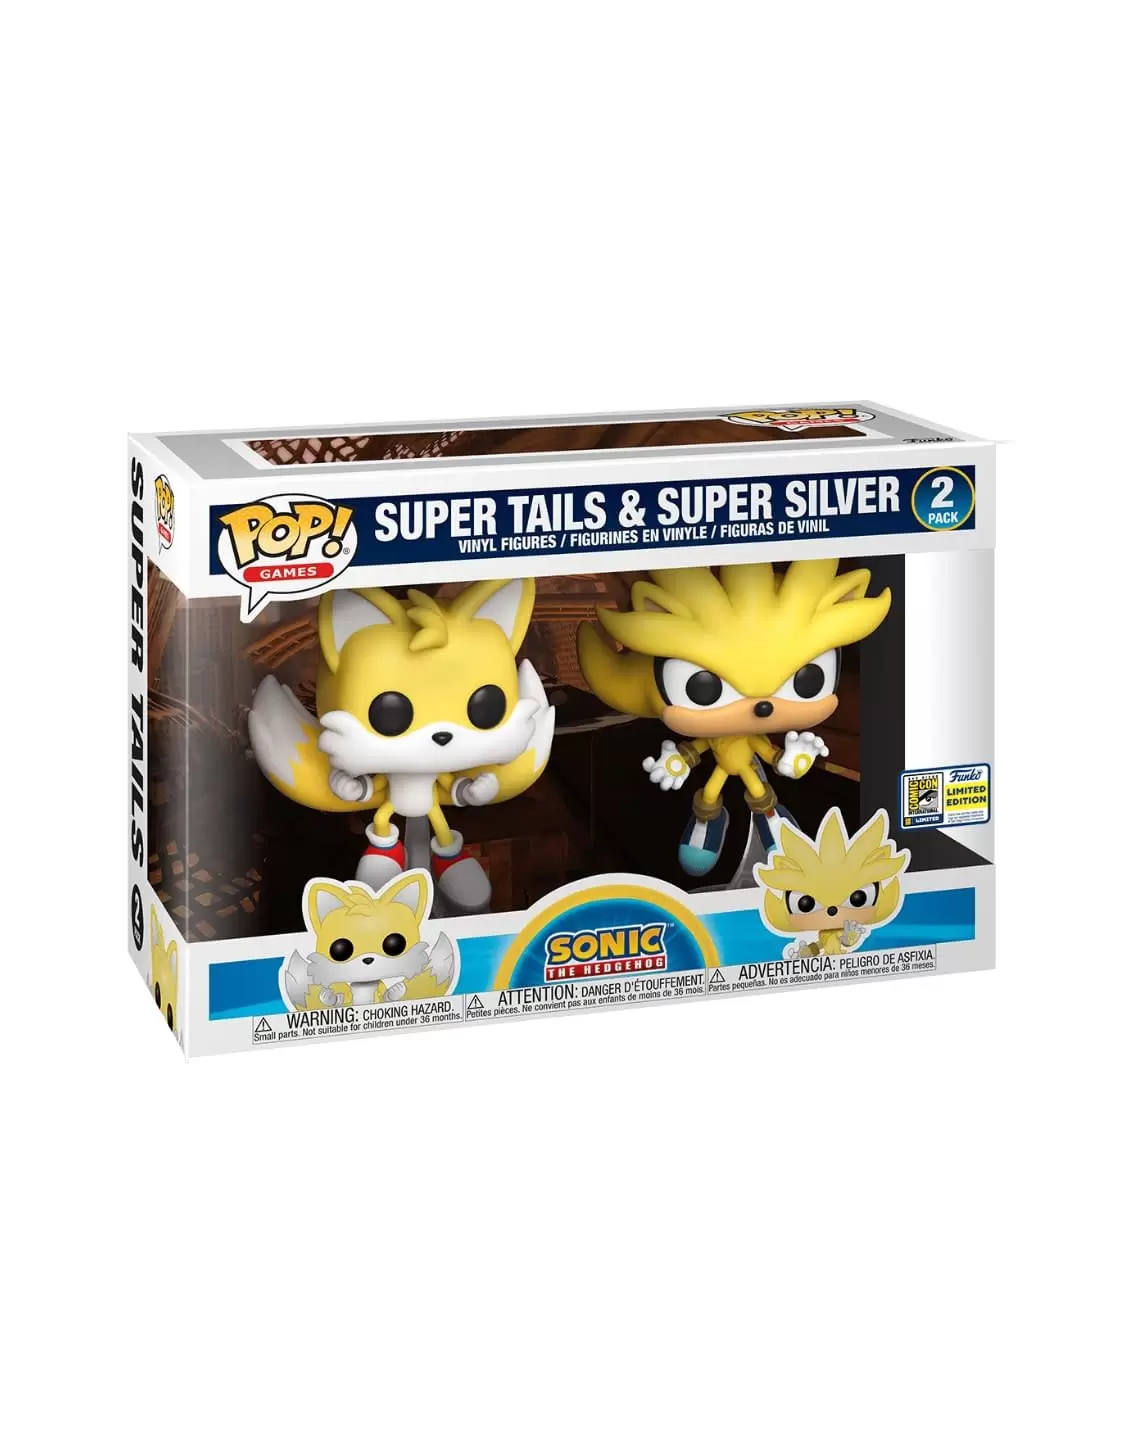 Funko Pop! GamesSonic The Hedgehog Super Silver & Super Tails 2